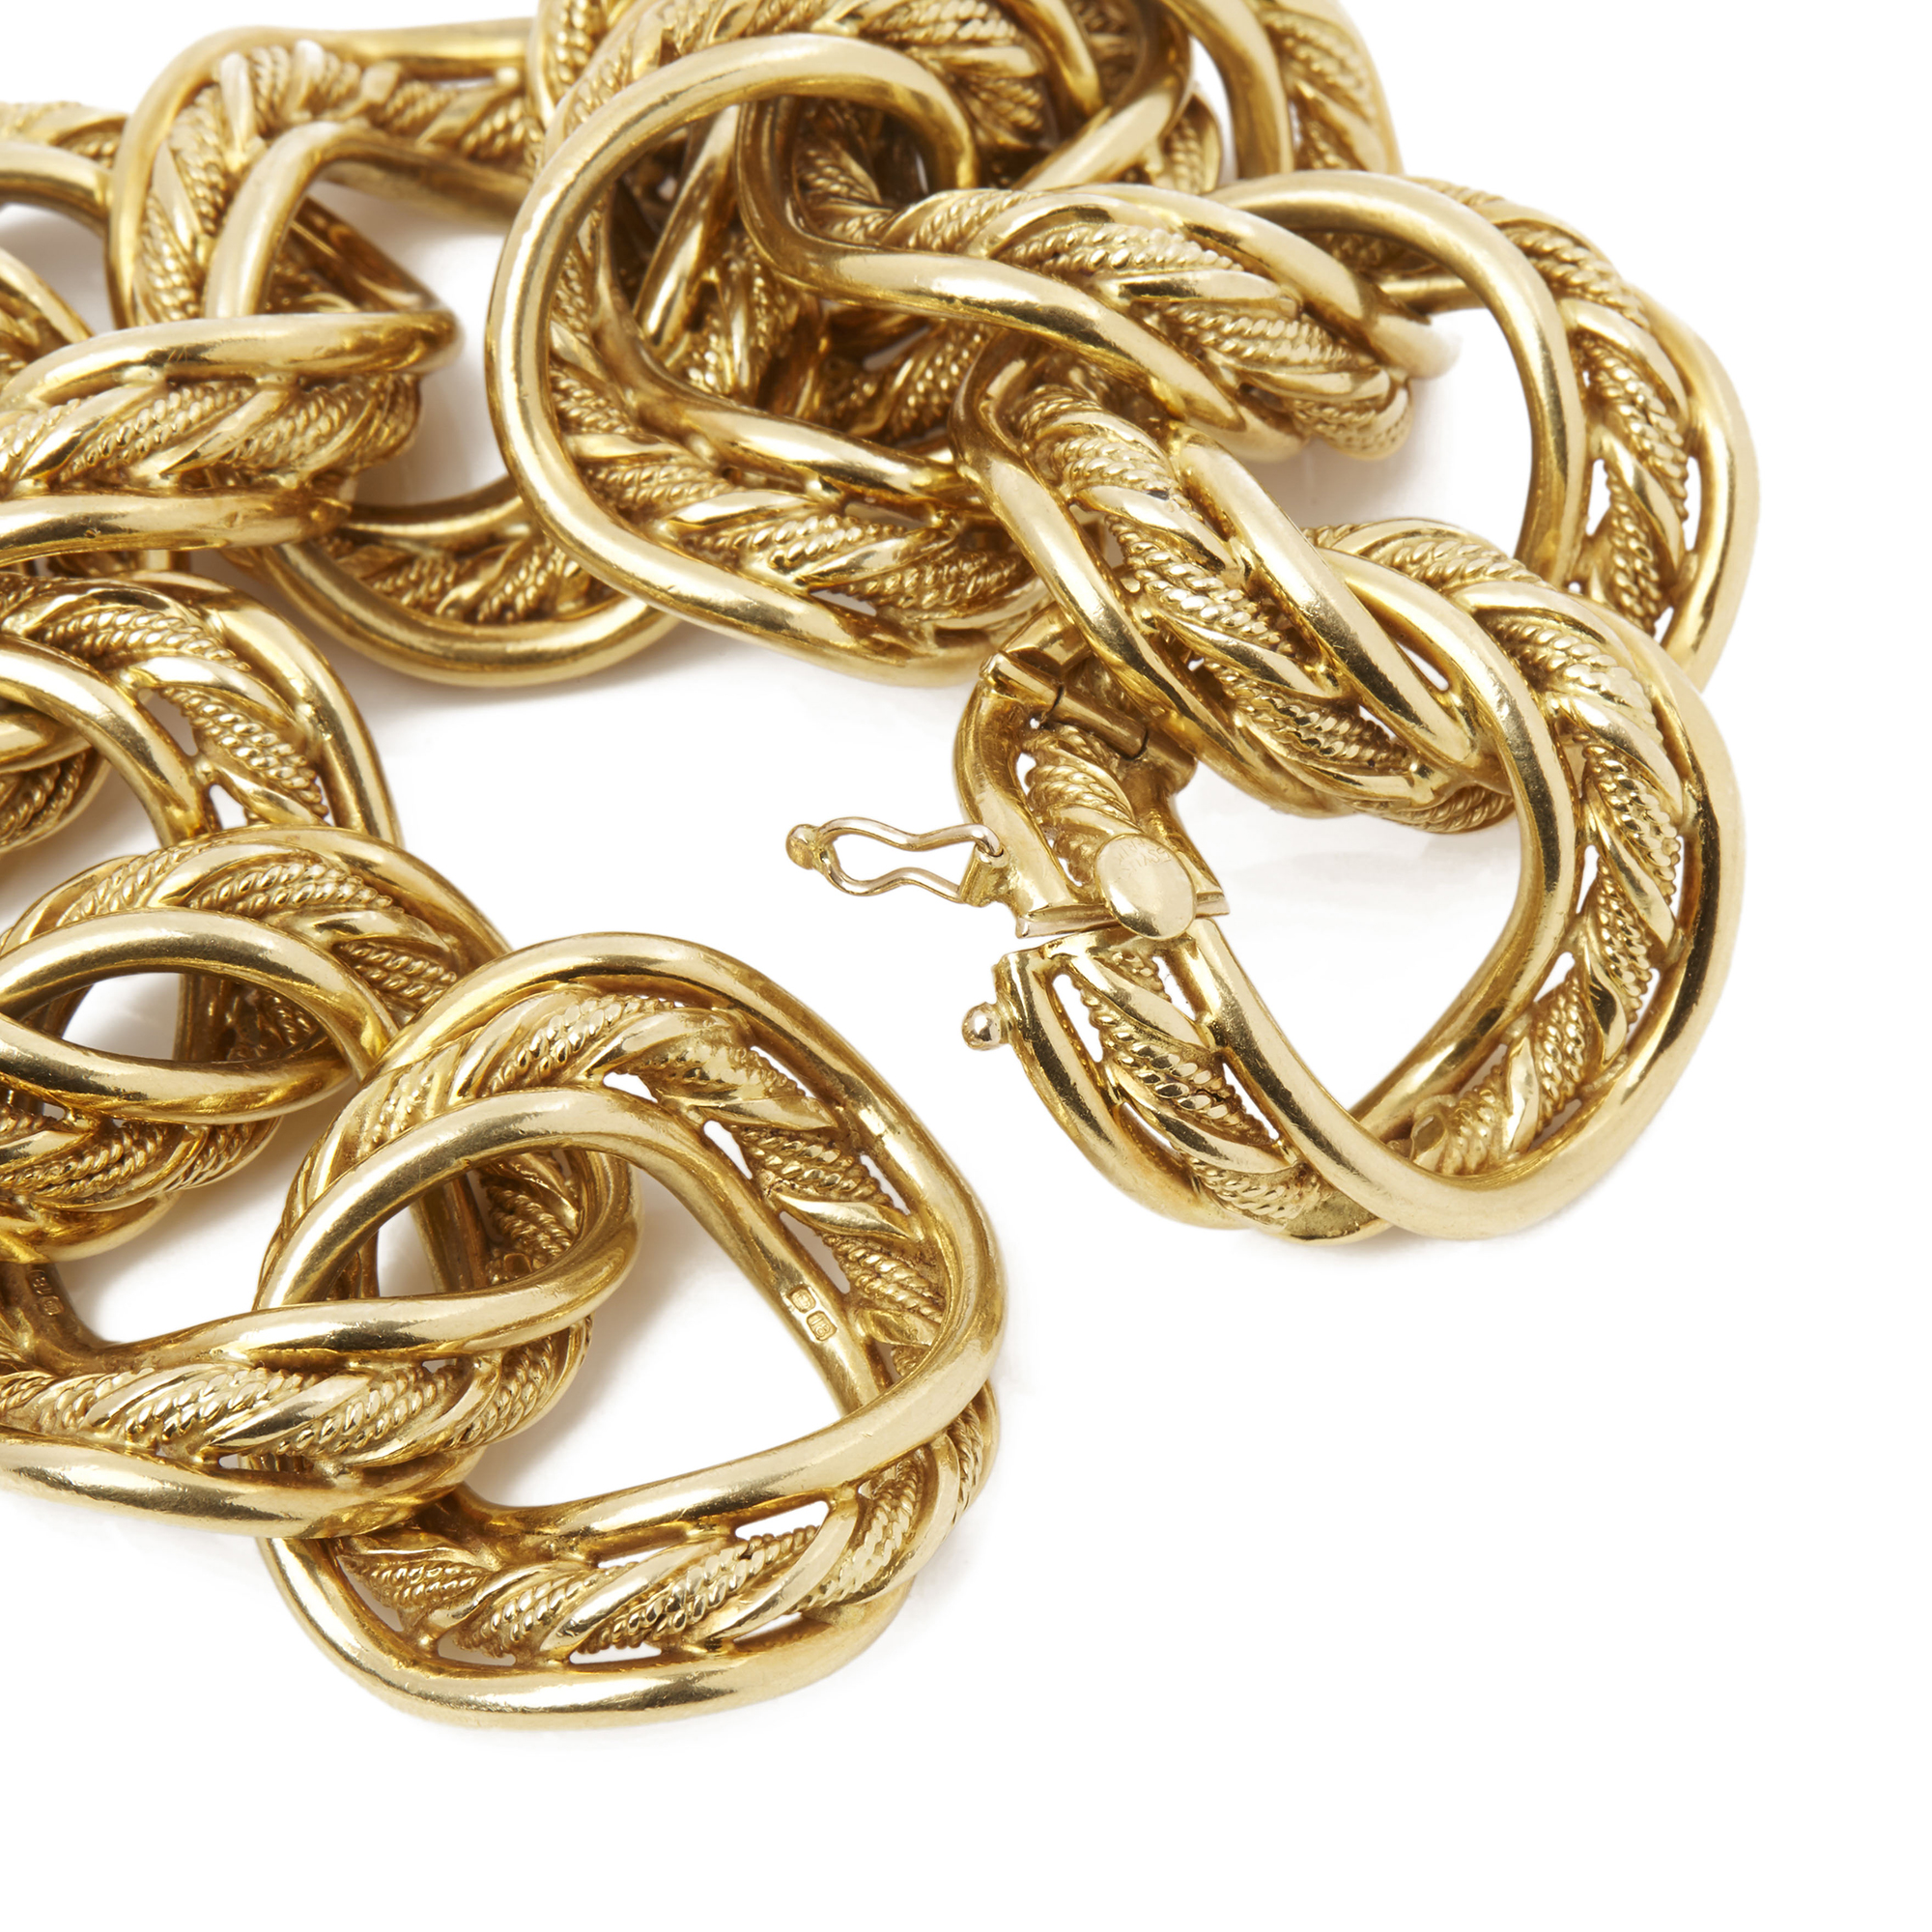 Kutchinsky 18k Yellow Gold 1960's Heavy Link Vintage Bracelet - Image 5 of 8